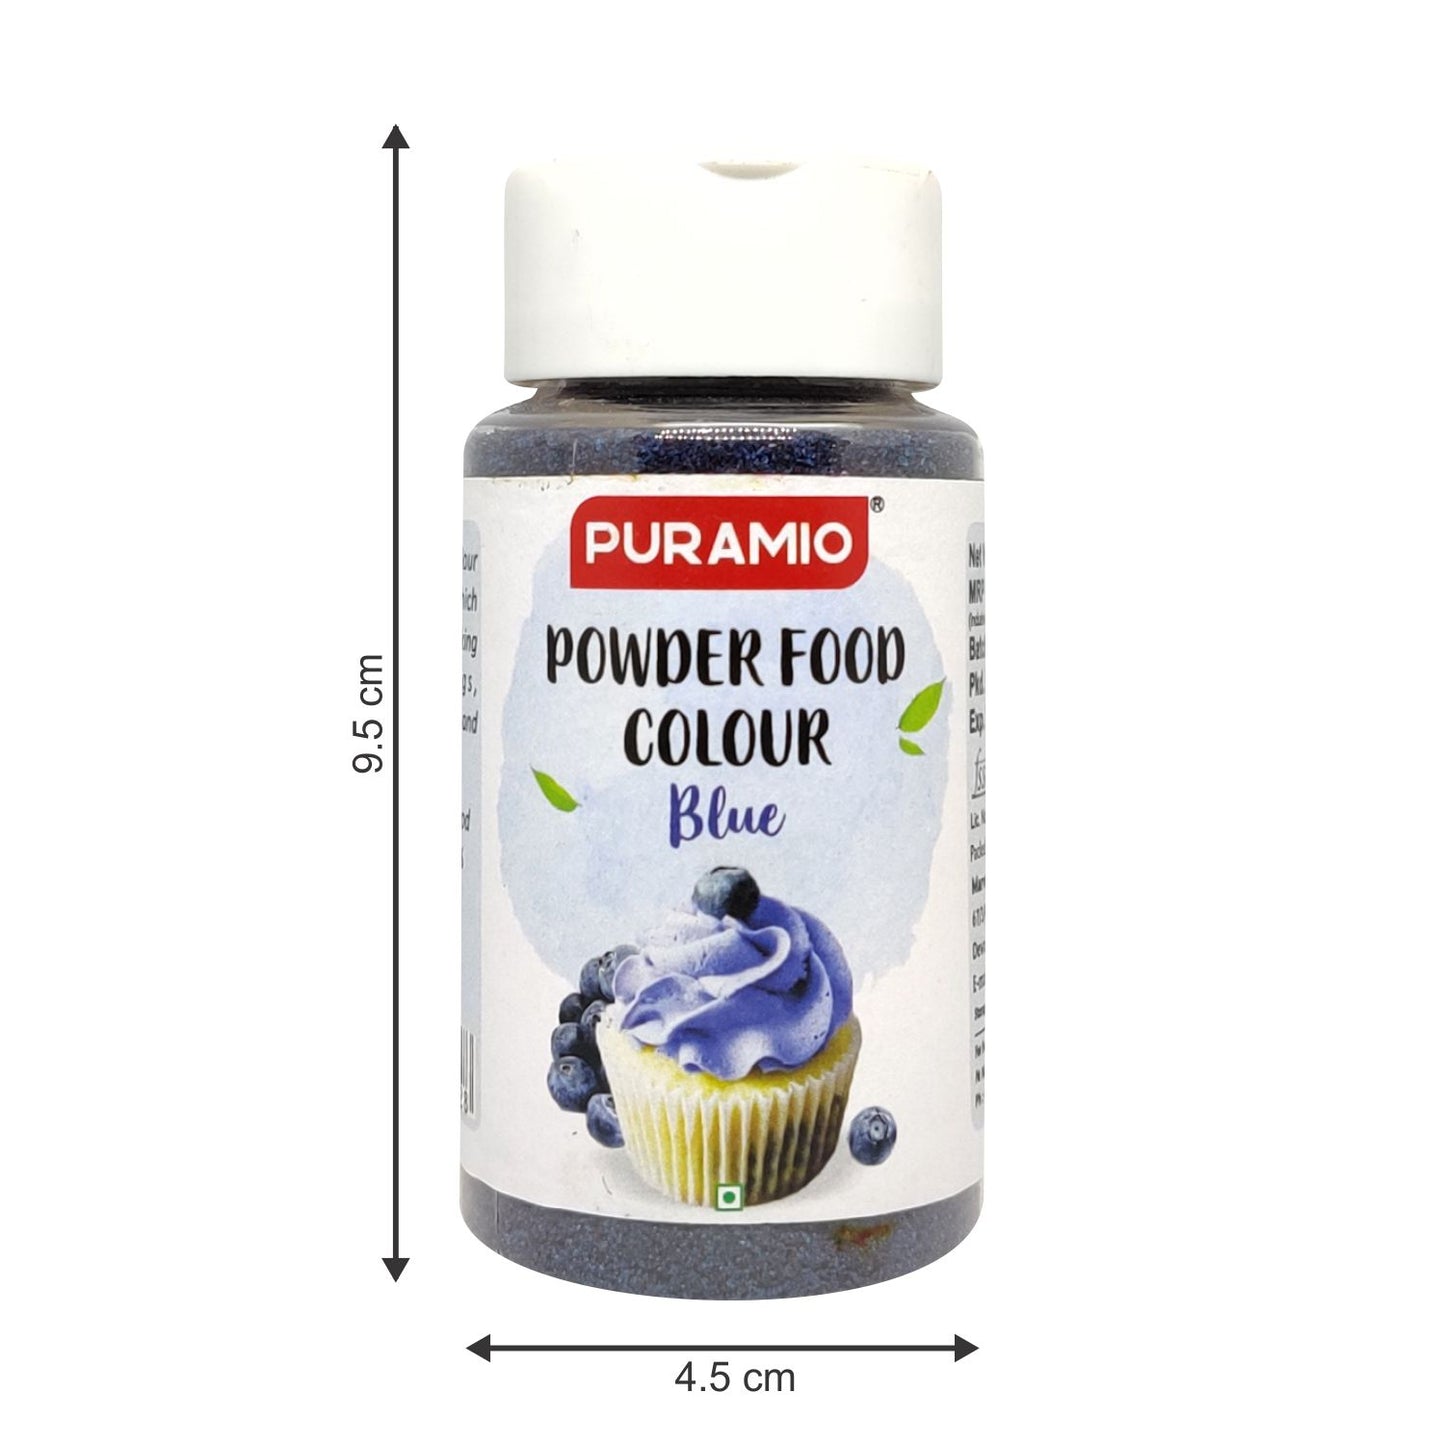 Puramio Powder Food Colour Combo of 6 [125g Each] - Apple Green, Chocolate Brown, Saffron (Kesari), Cola, Lemon Yellow, Orange Red